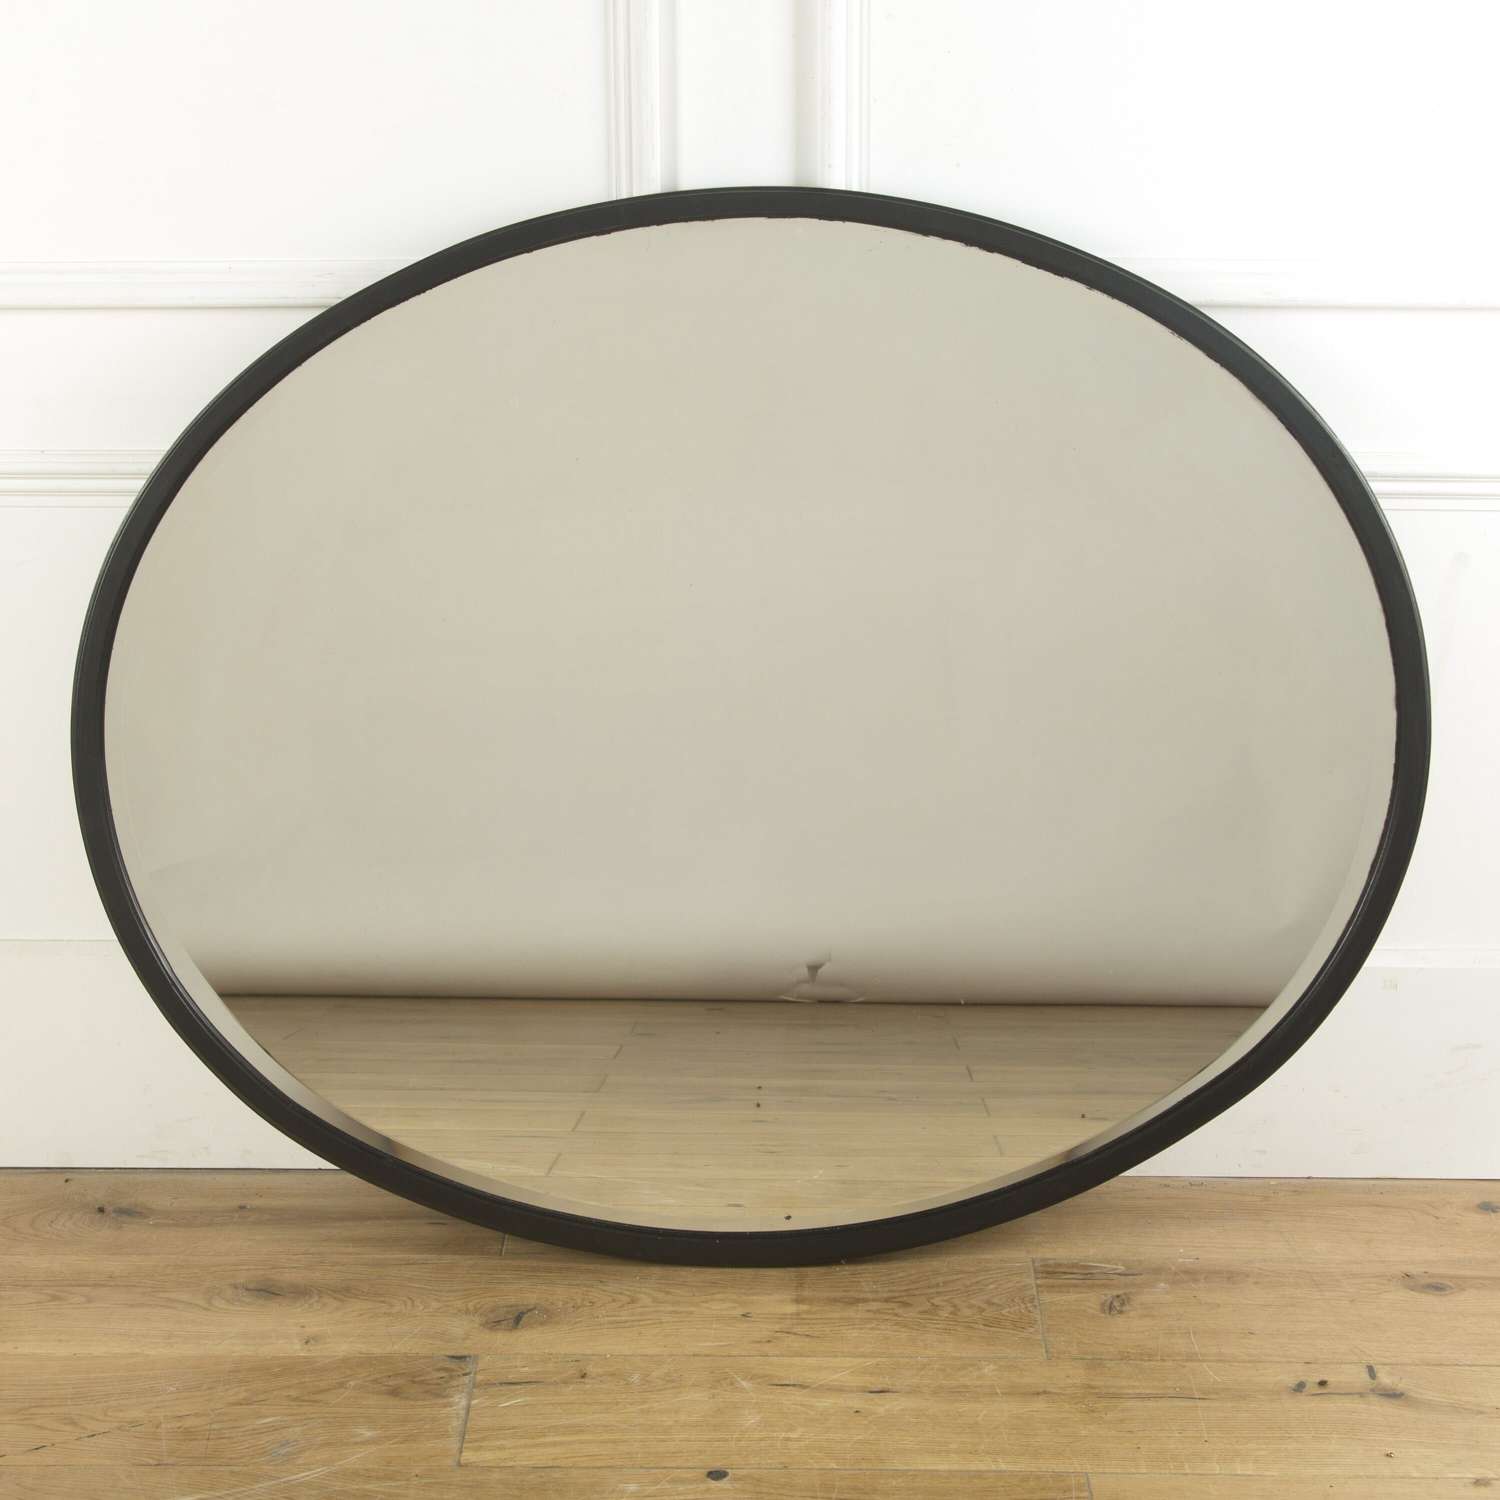 A large Edwardian Oval mirror